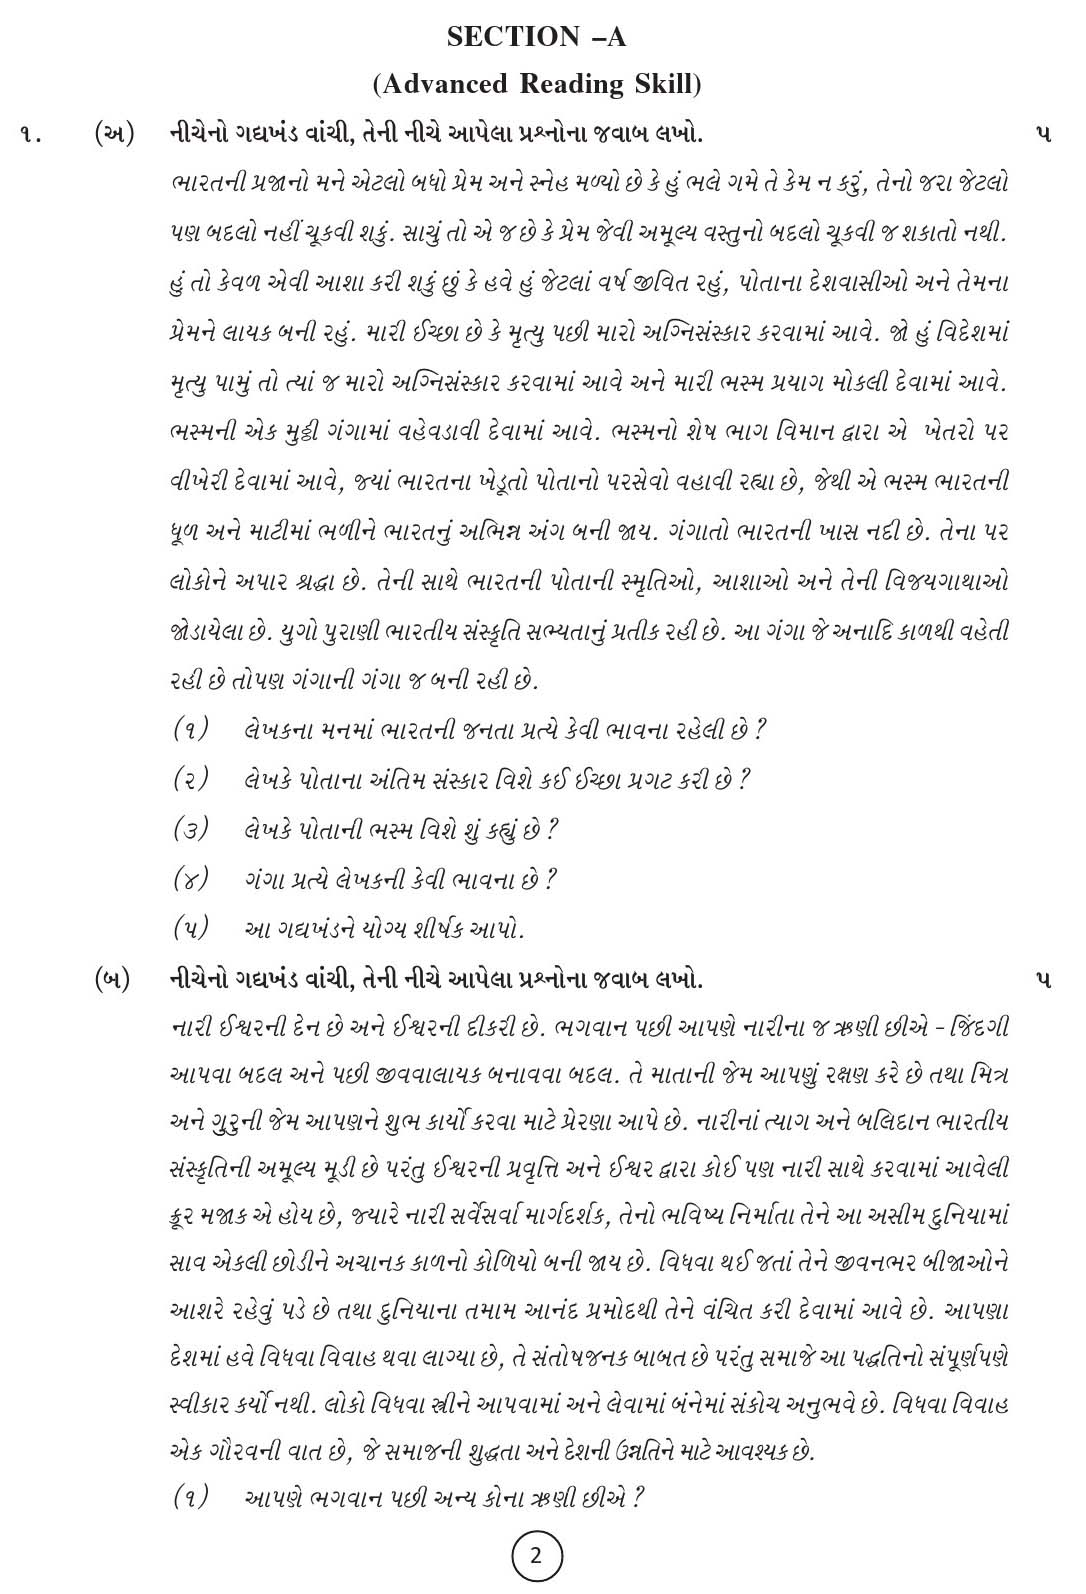 Gujarati CBSE Class X Sample Question Paper 2018-19 - Image 2